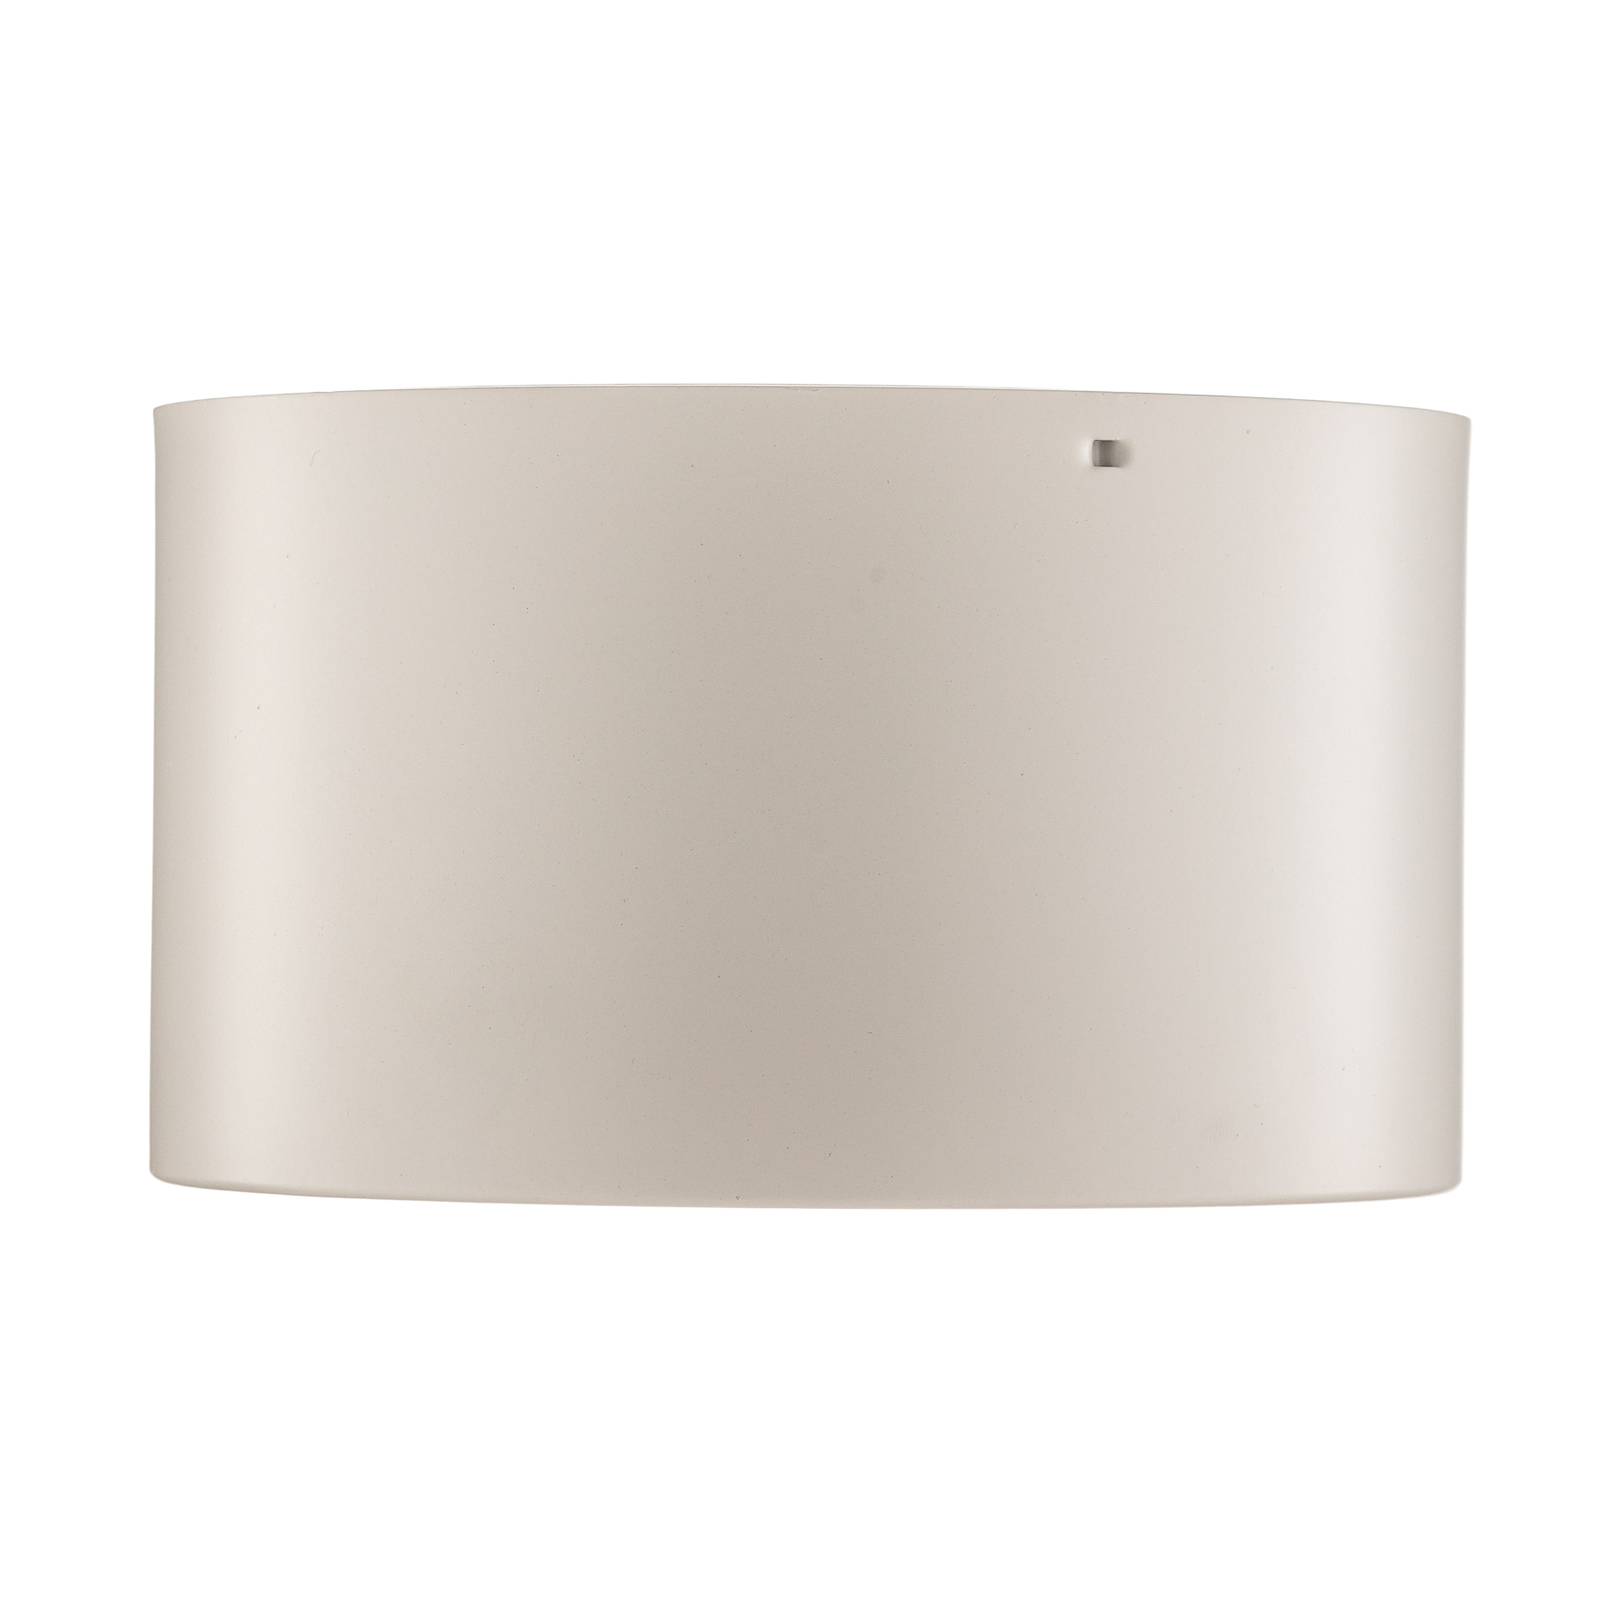 LED downlight Ita en blanc avec diffuseur, Ø 15 cm